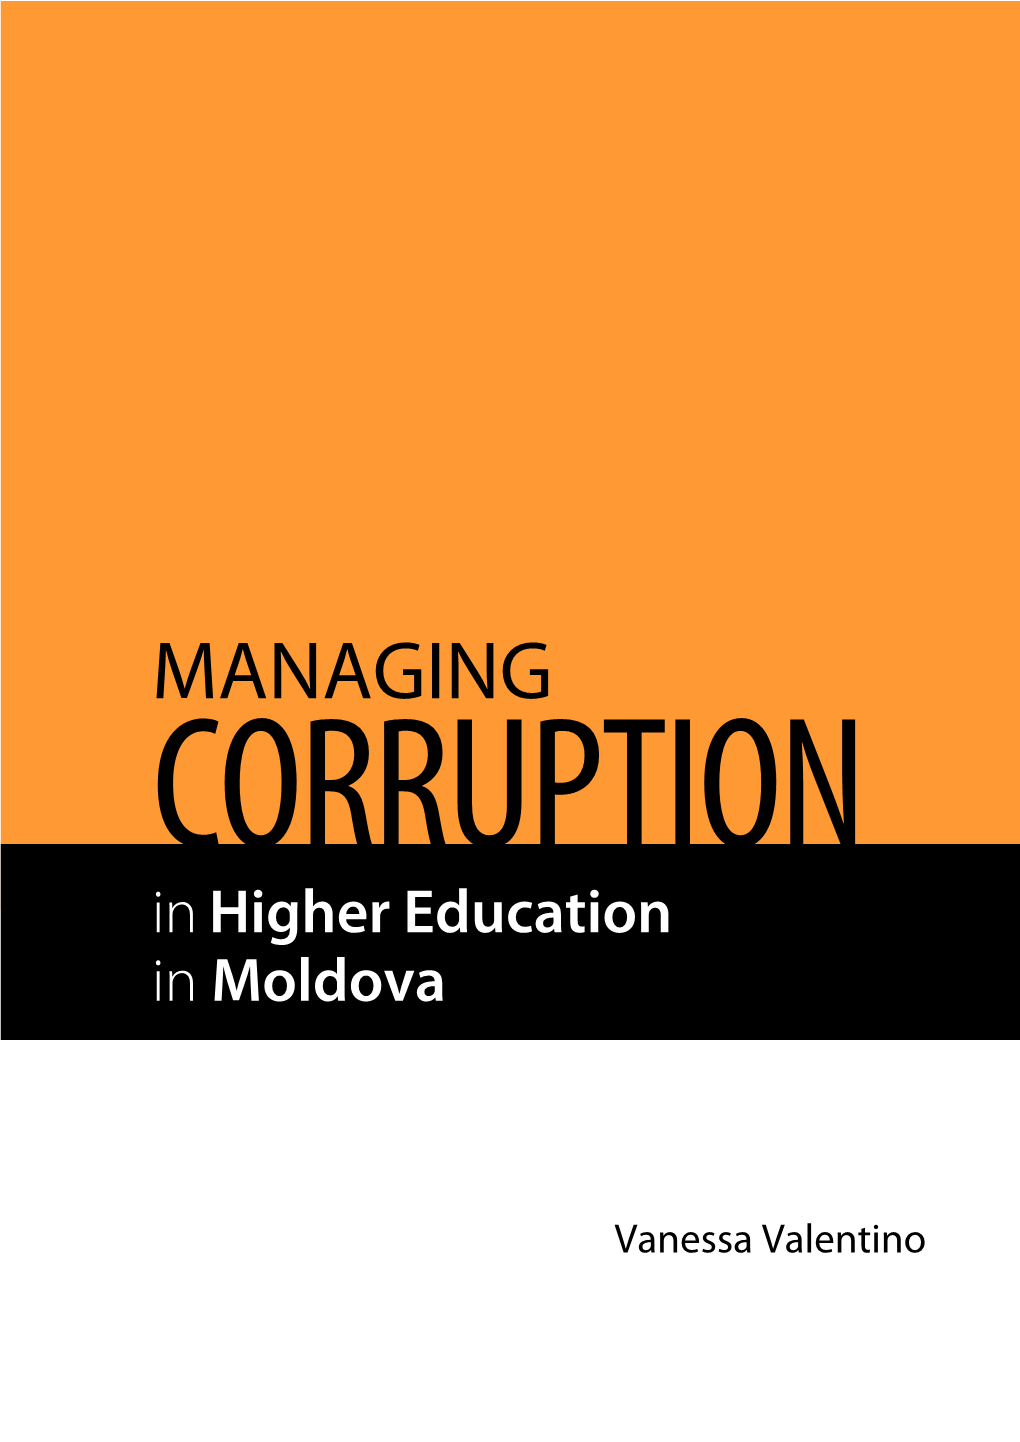 MANAGING CORRUPTION in Higher Education in Moldova